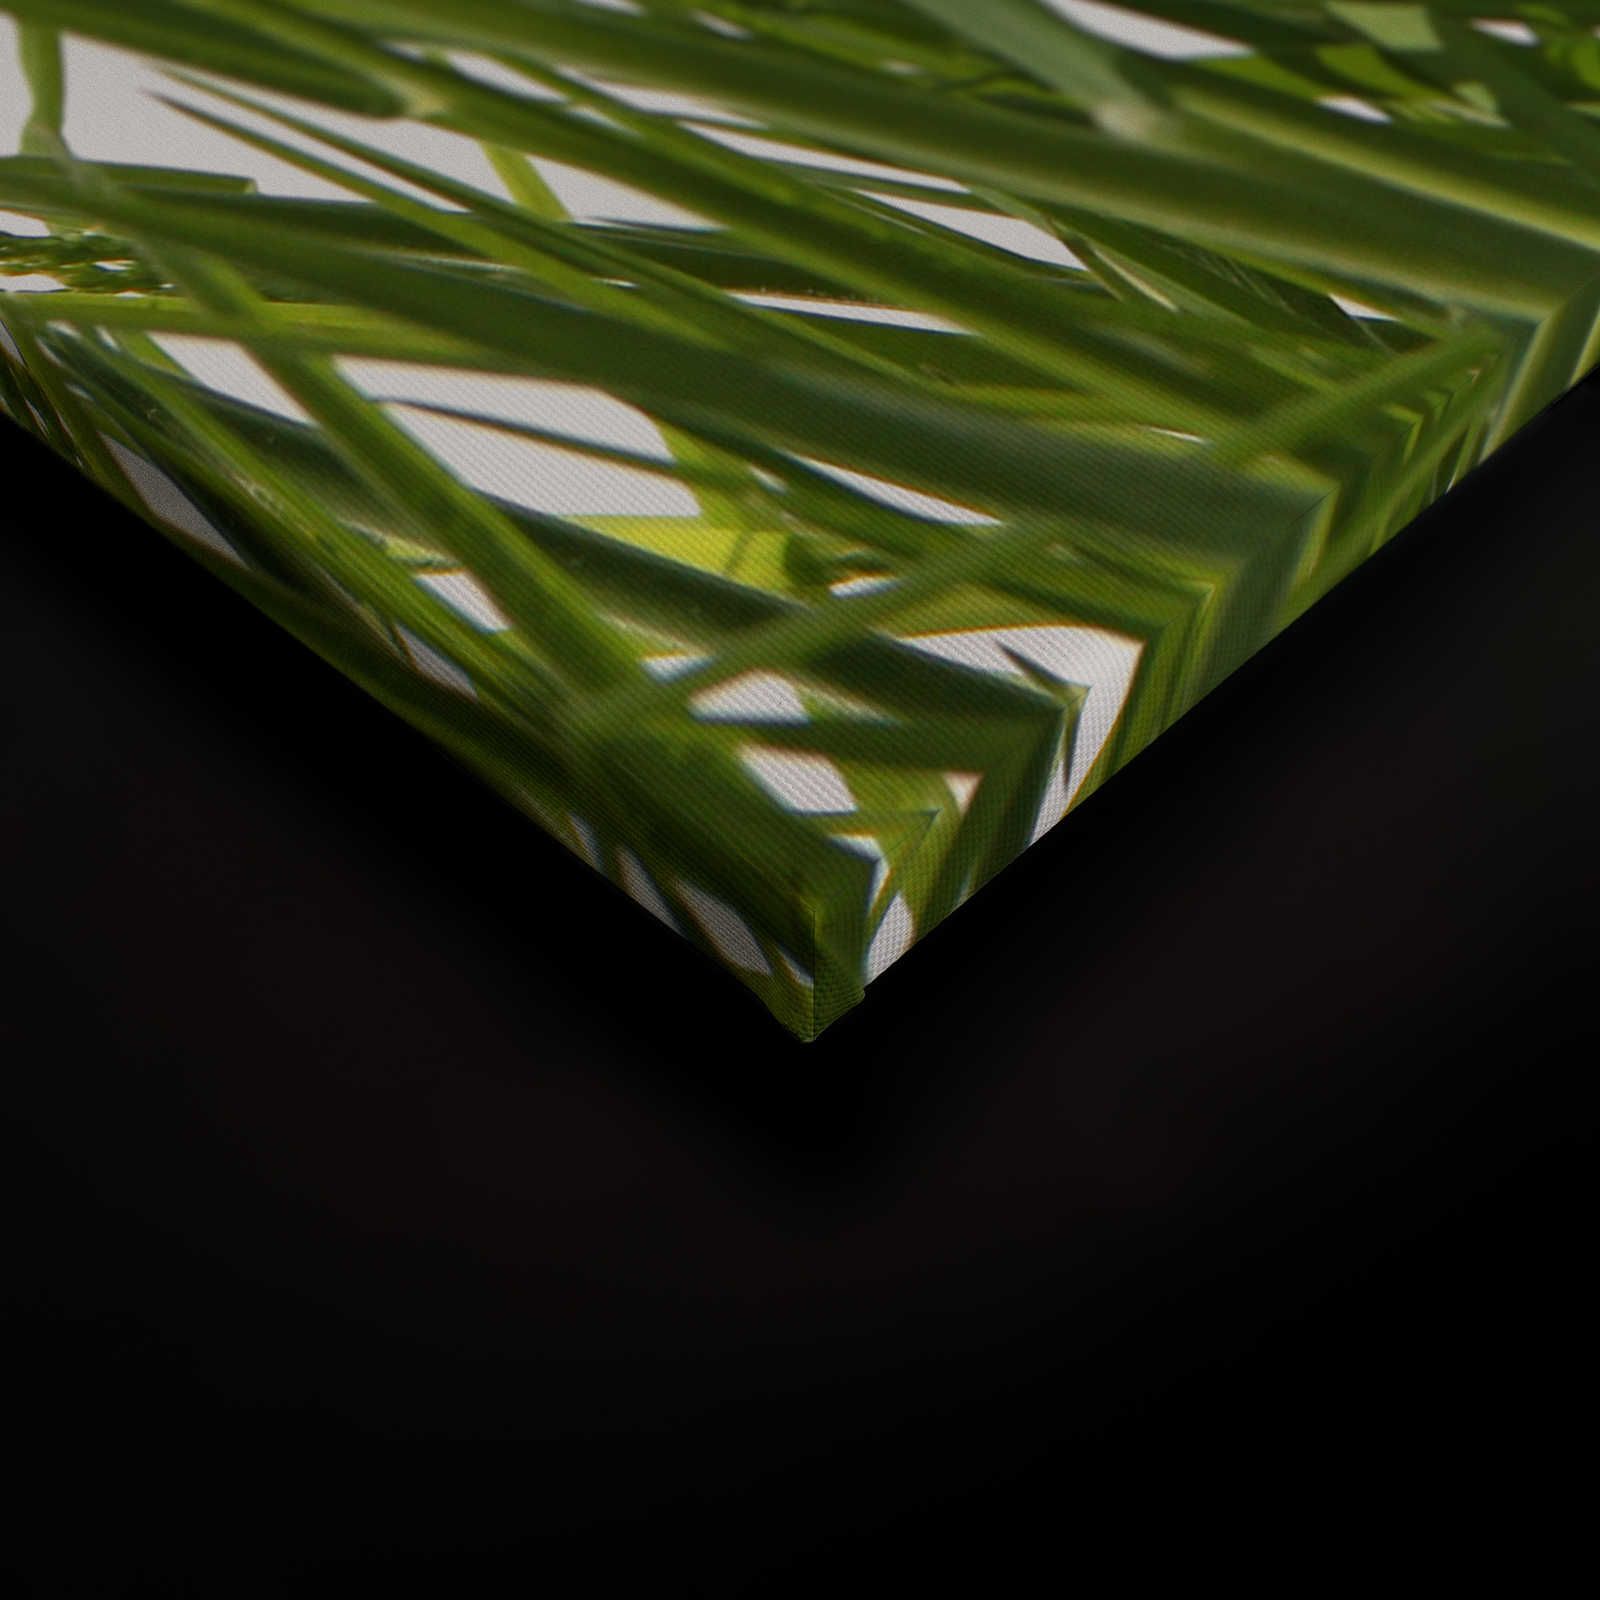             Cuadro Detalle hierbas con fondo blanco - 0,90 m x 0,60 m
        